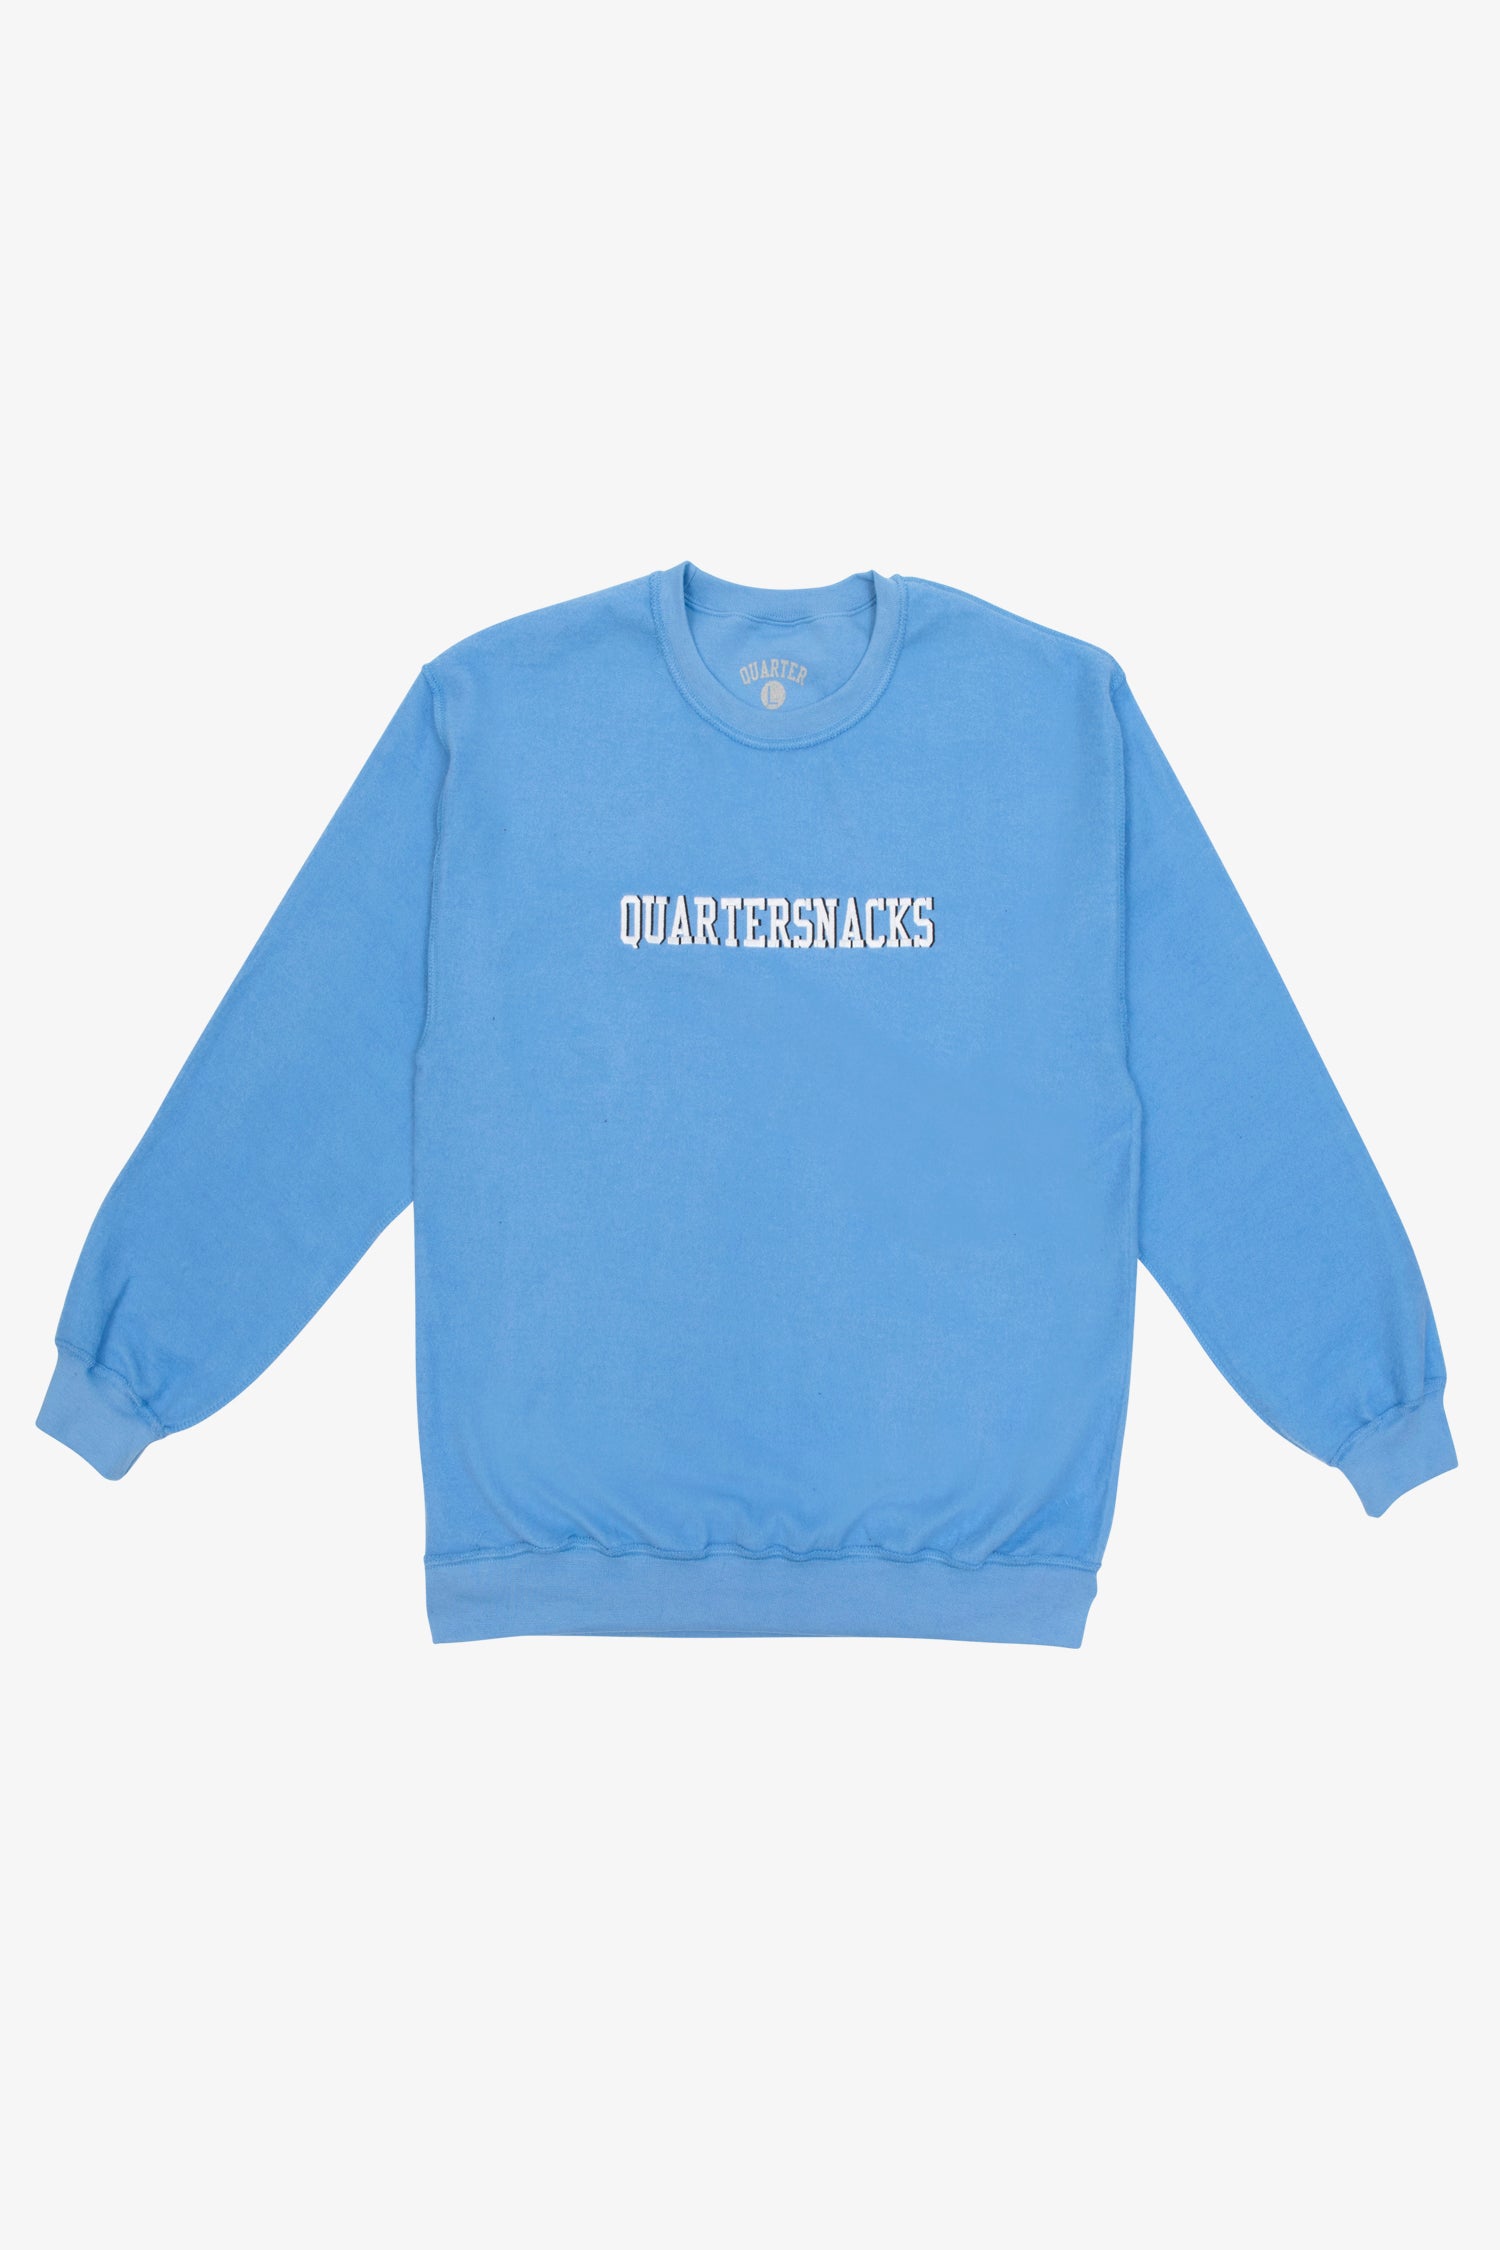 Selectshop FRAME - QUARTER SNACKS Inside Out Embroidered Crewneck Sweatshirts Dubai